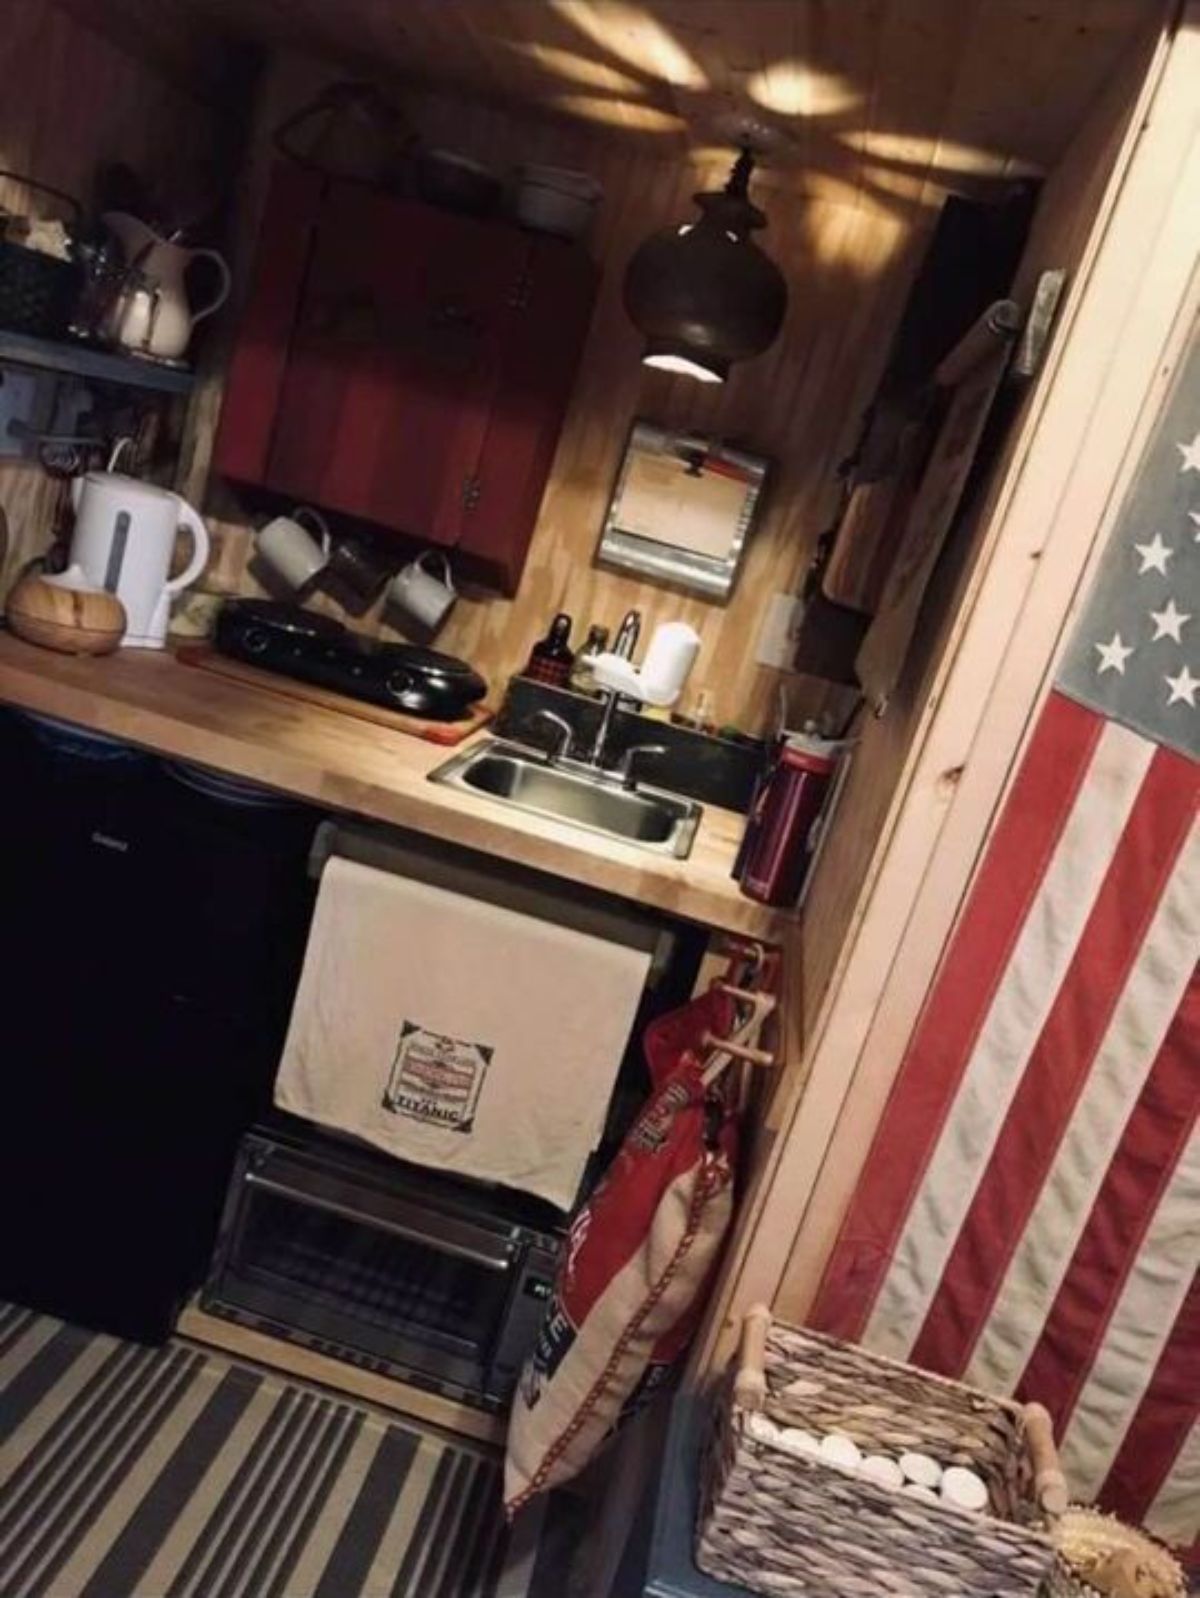 Kitchen area of 16’ Mini House